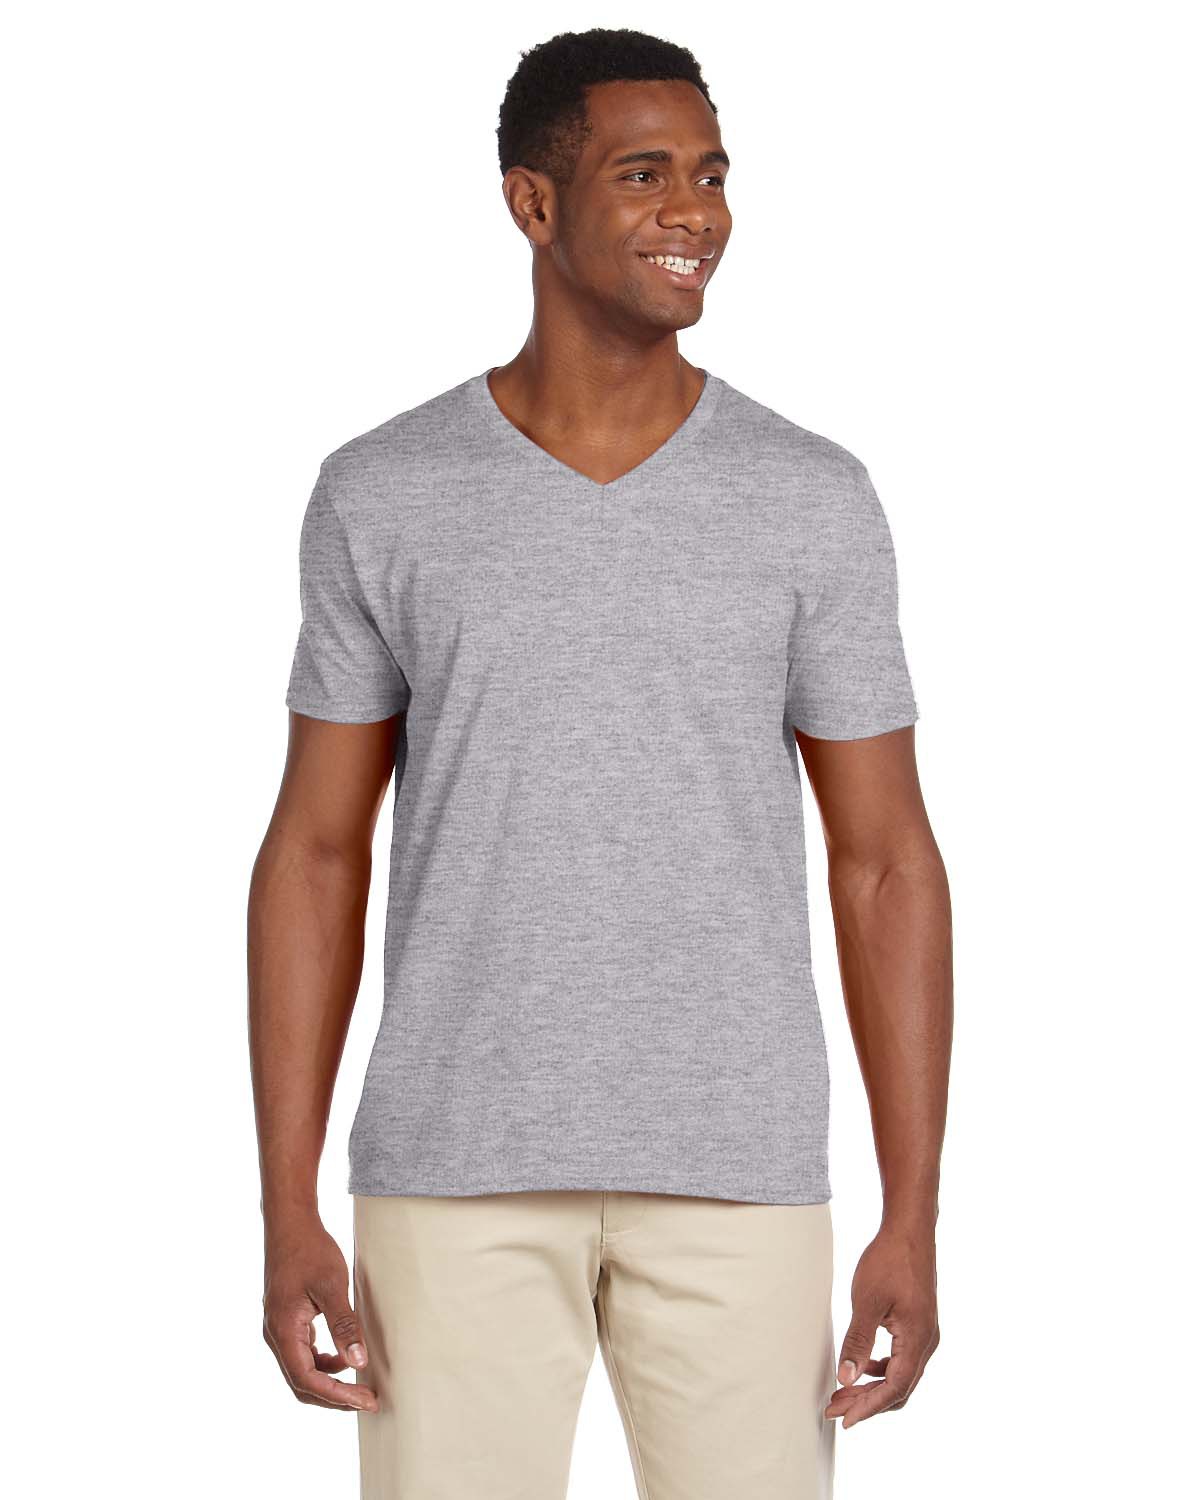 Gildan® Sport Grey Softstyle Adult Unisex T-Shirt